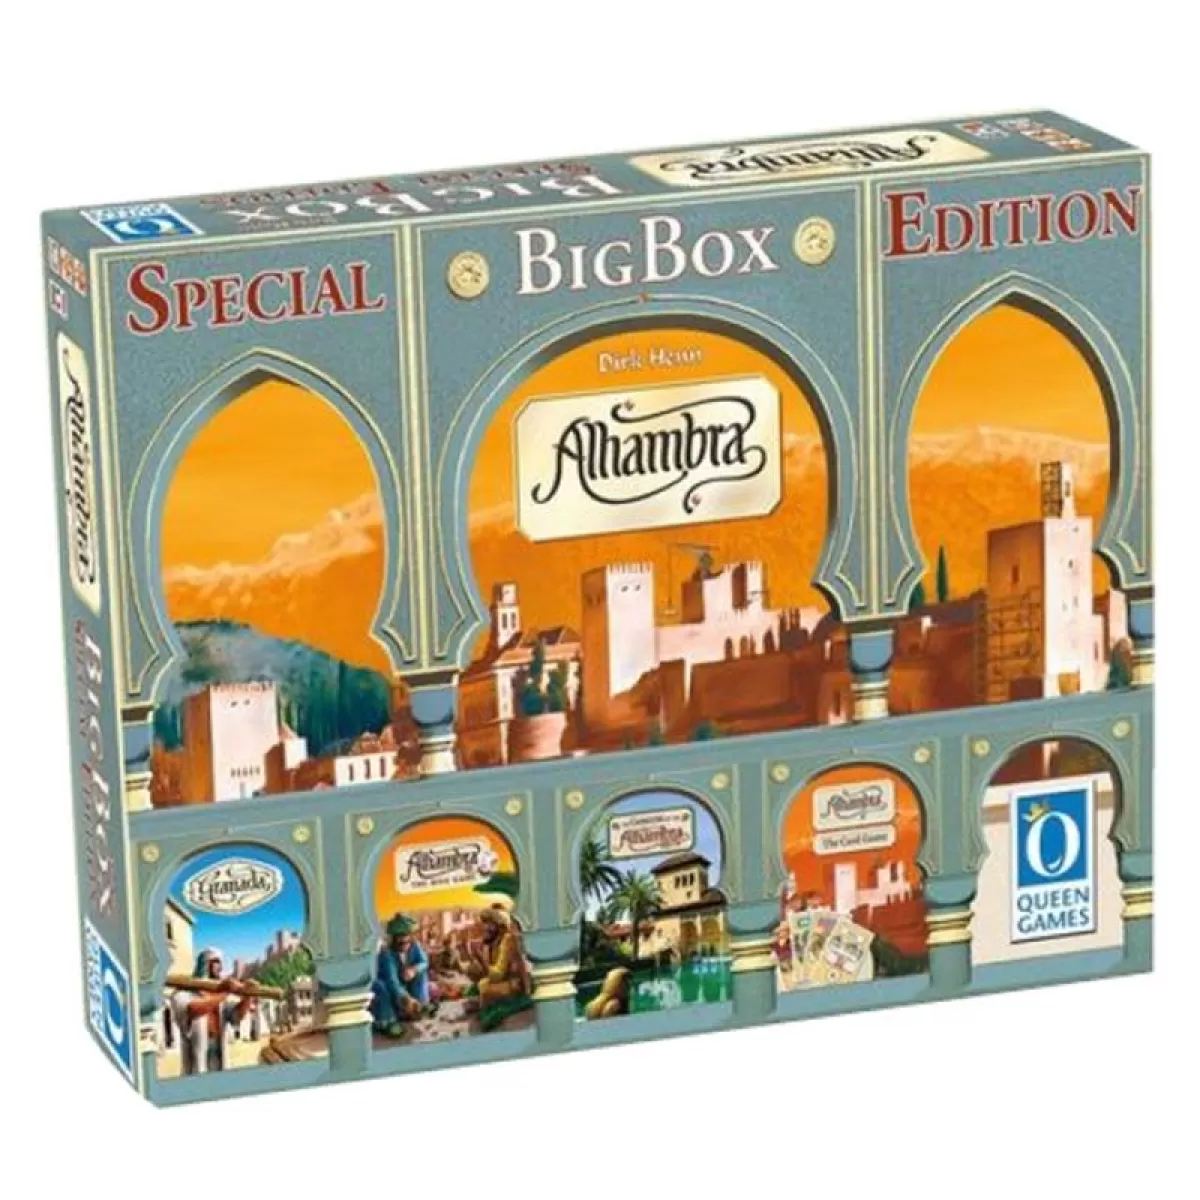 Alhambra: Big box special edition